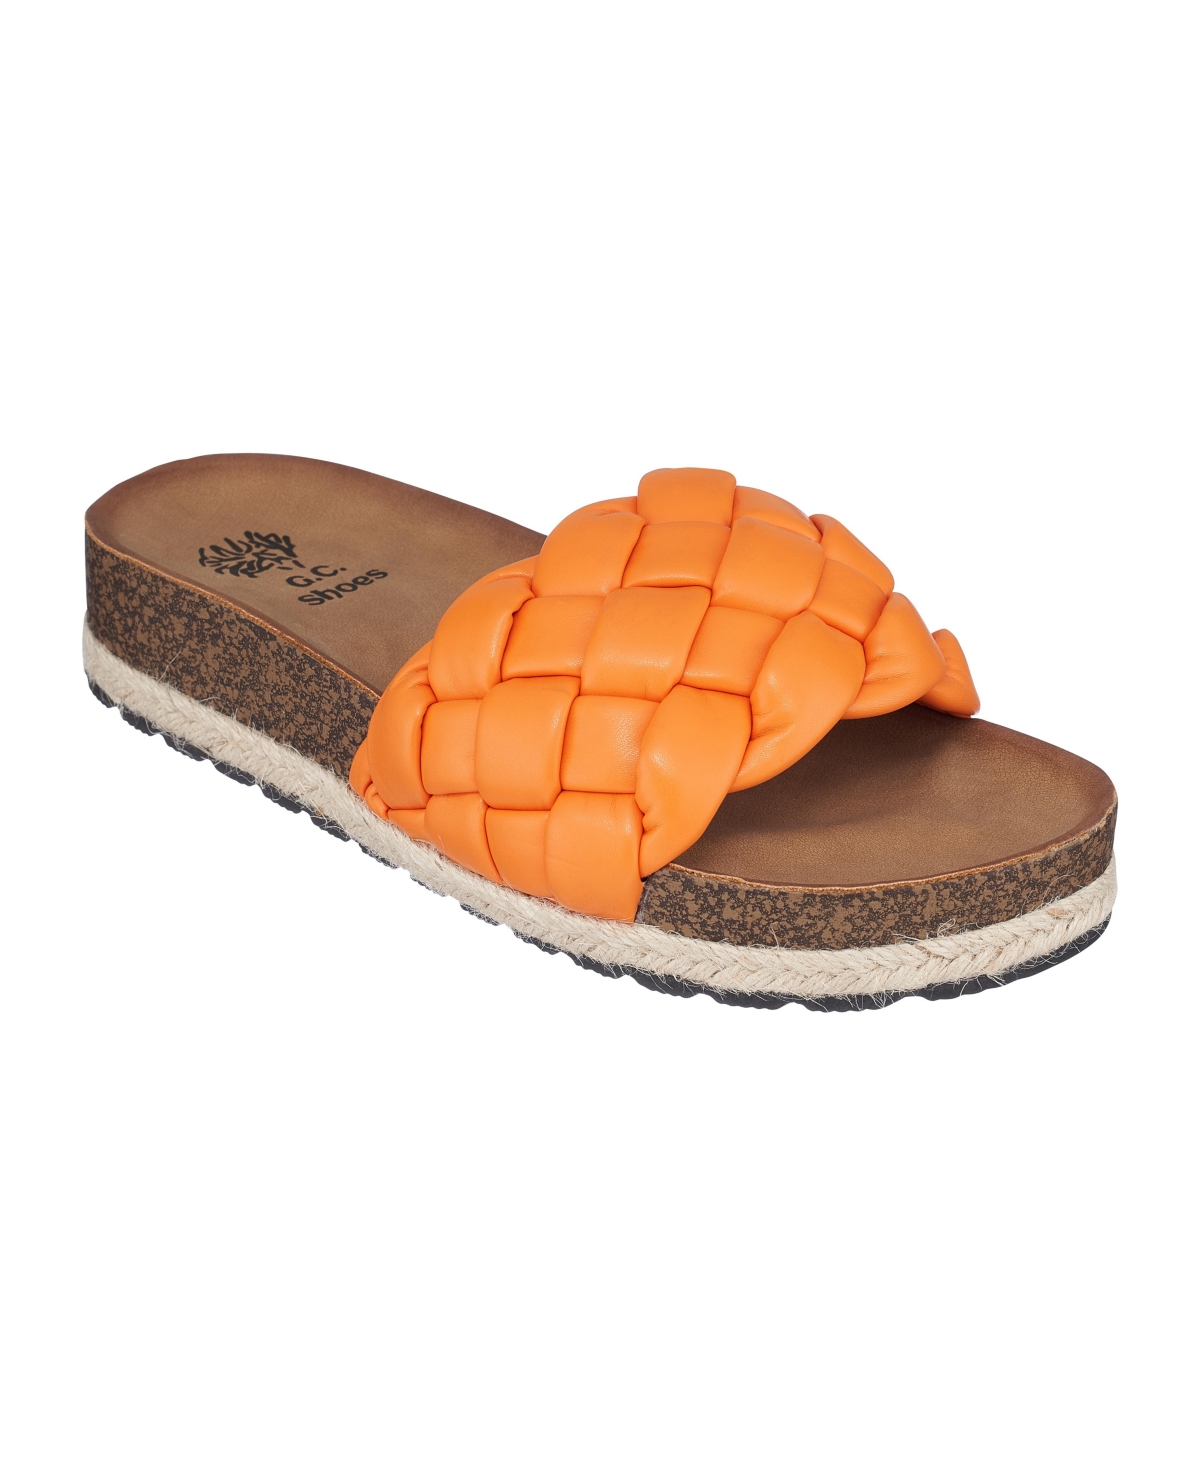 Women's Lesley Slide Sandals - Orange